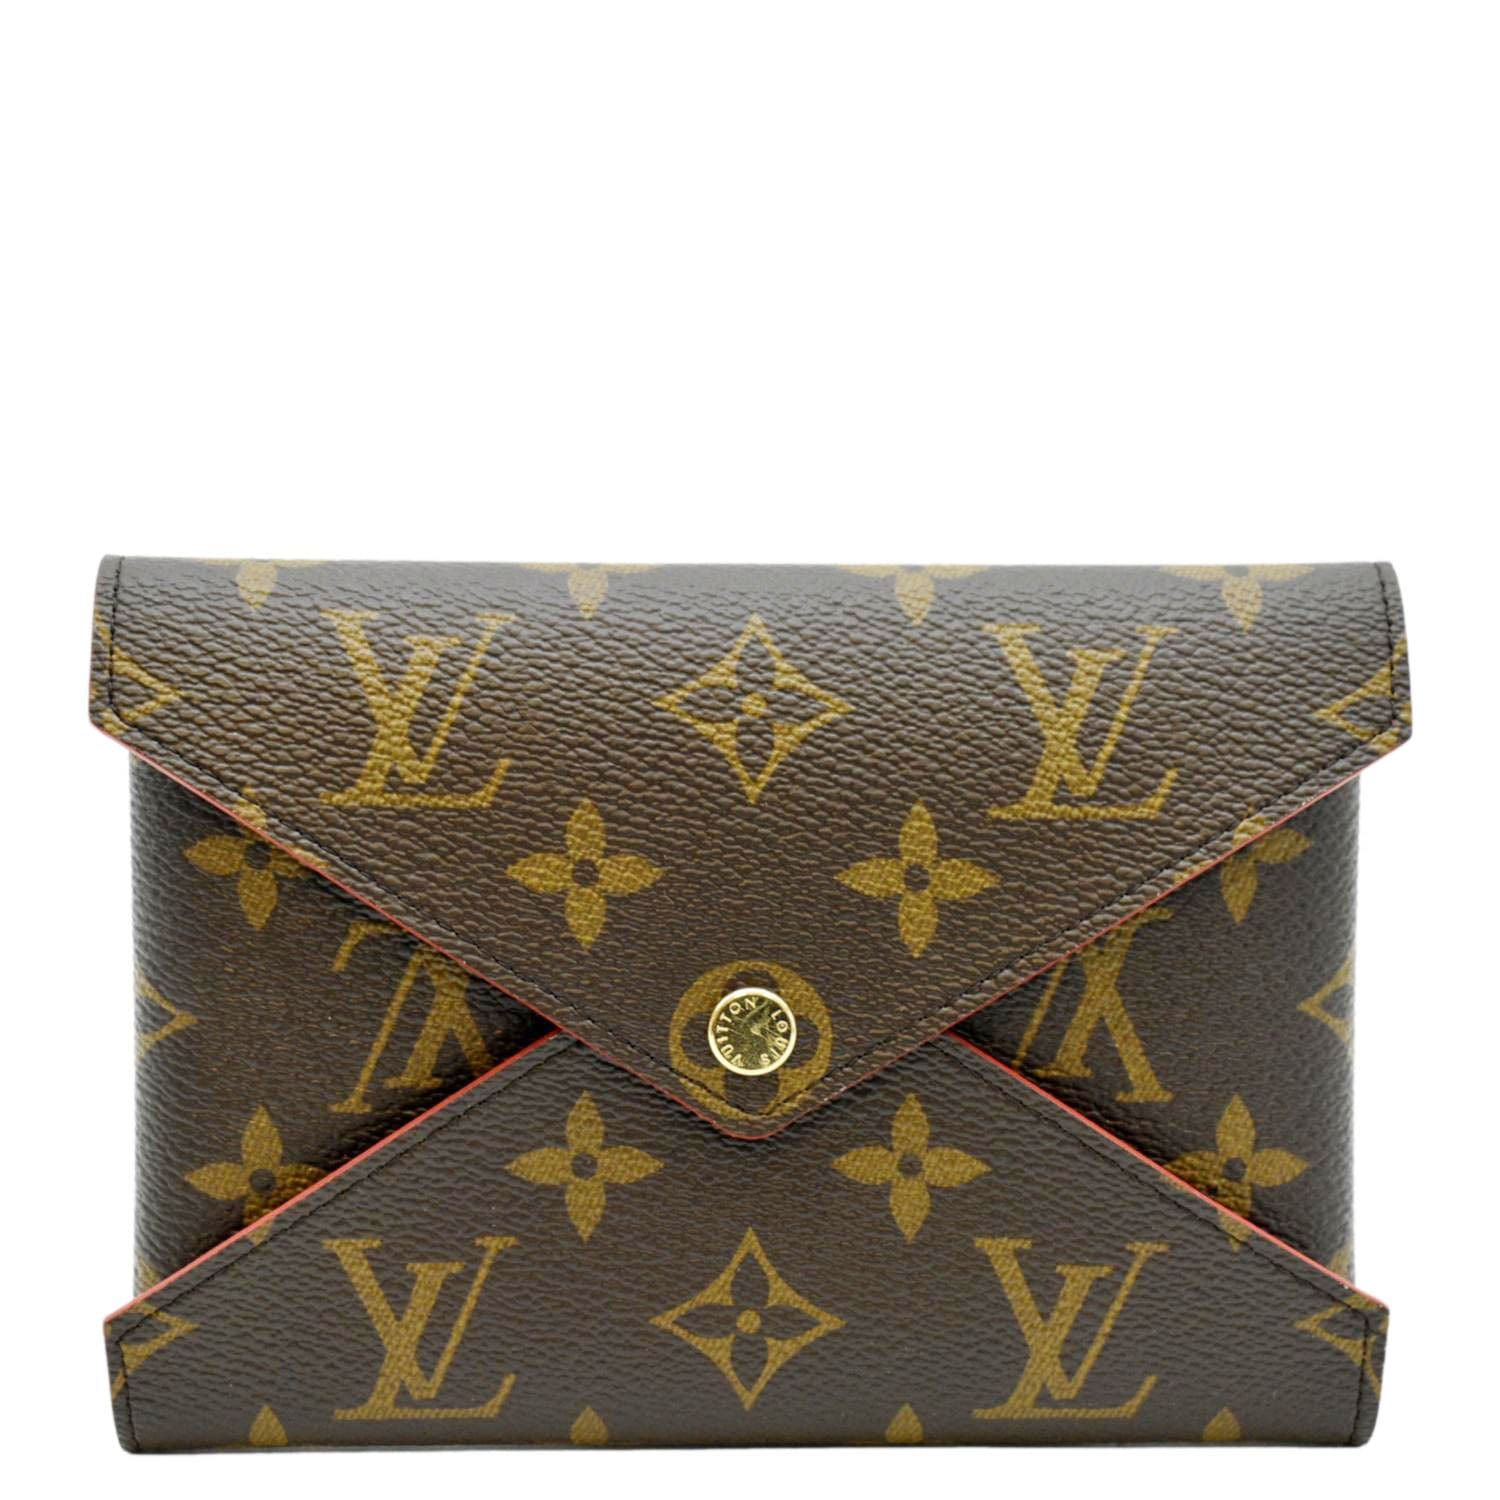 Turning Louis Vuitton Kirigami Pochette into crossbody purse 